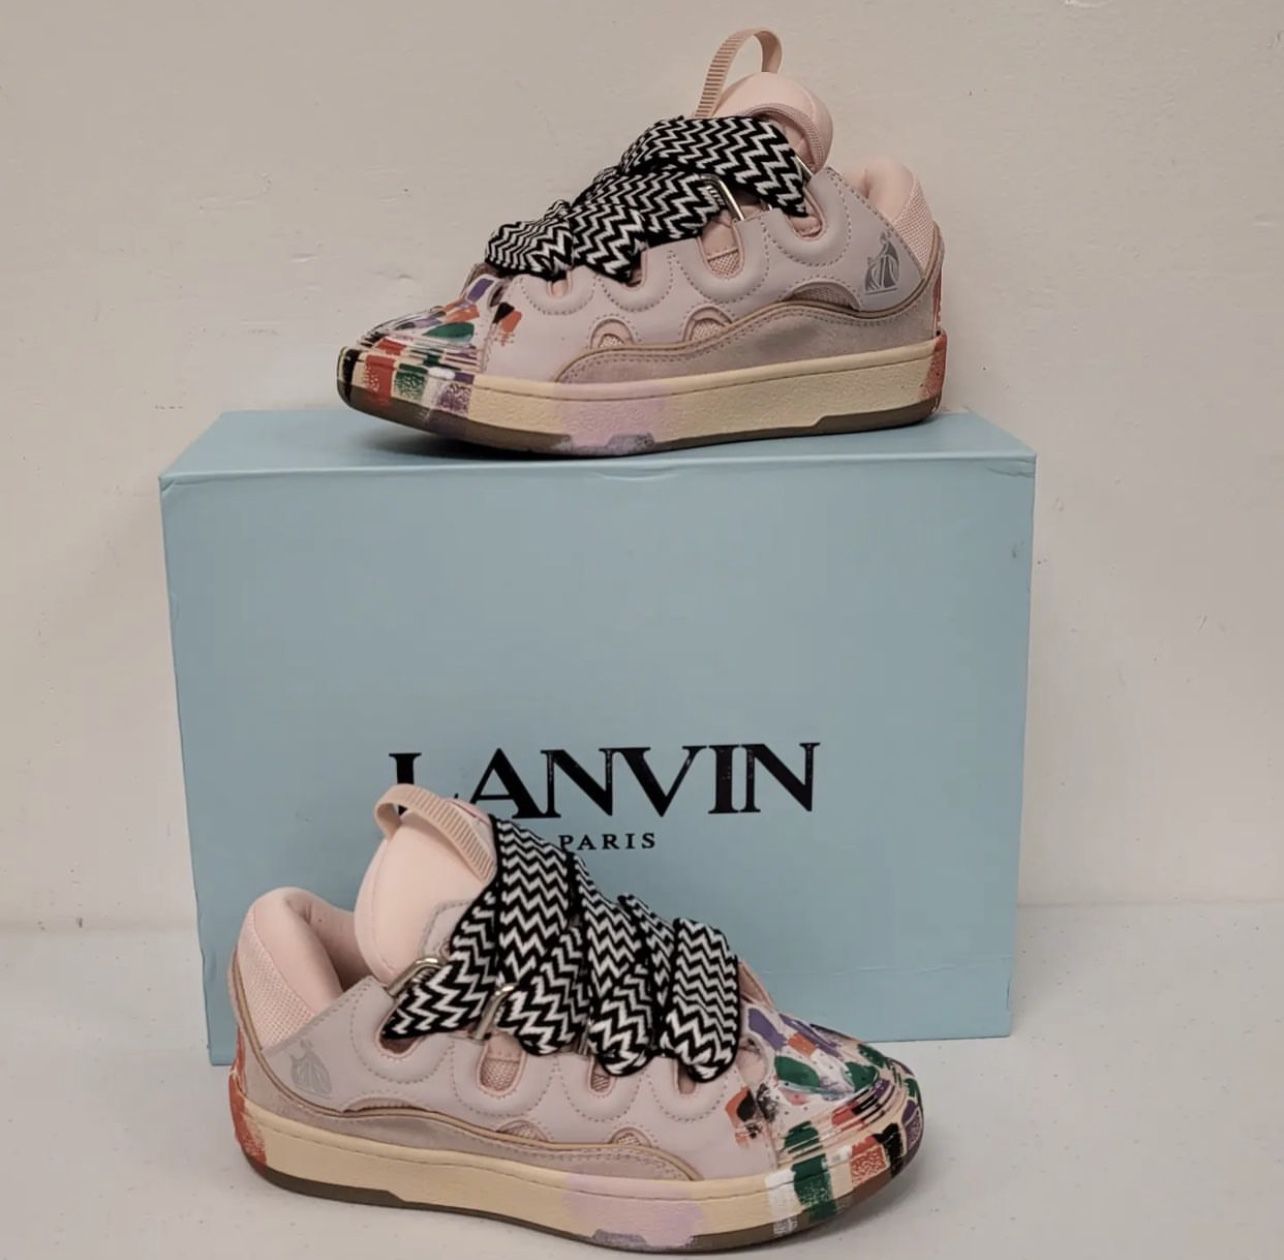 Lanvin Curb Sneakers 